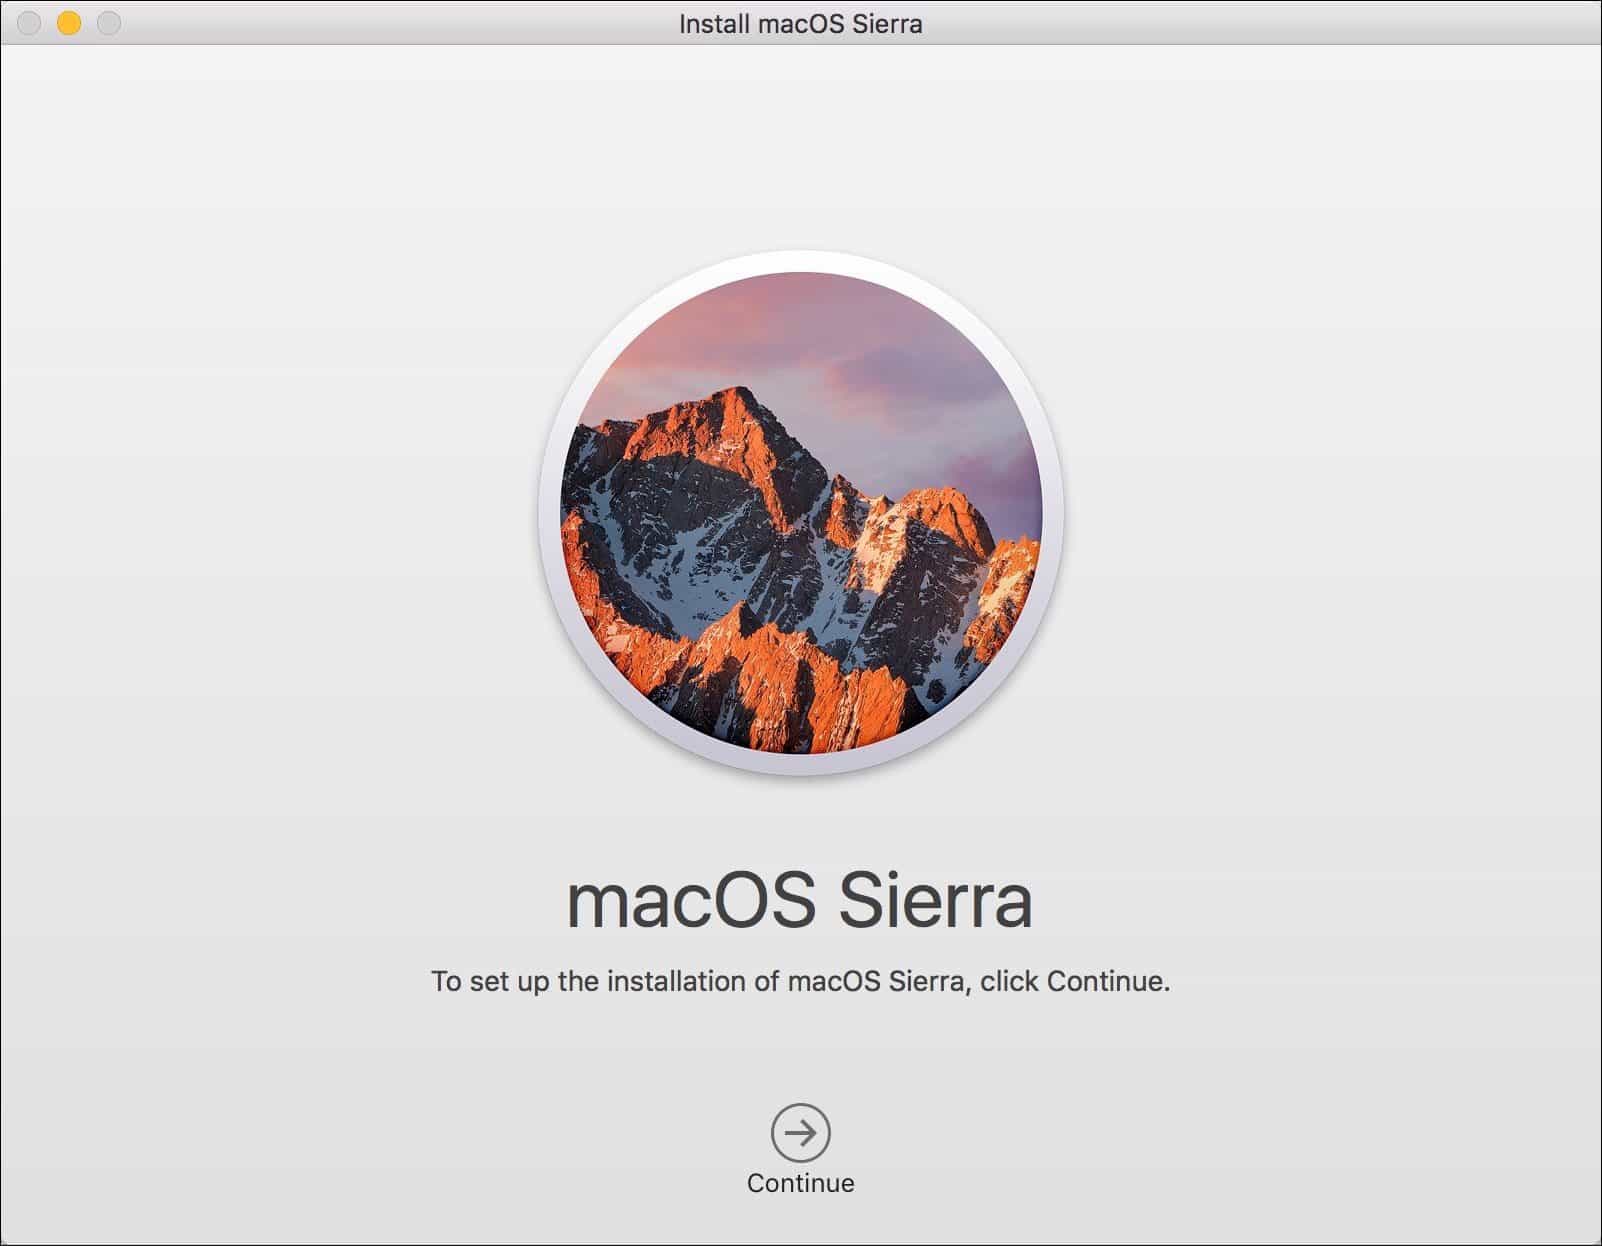 download the macos sierra installer